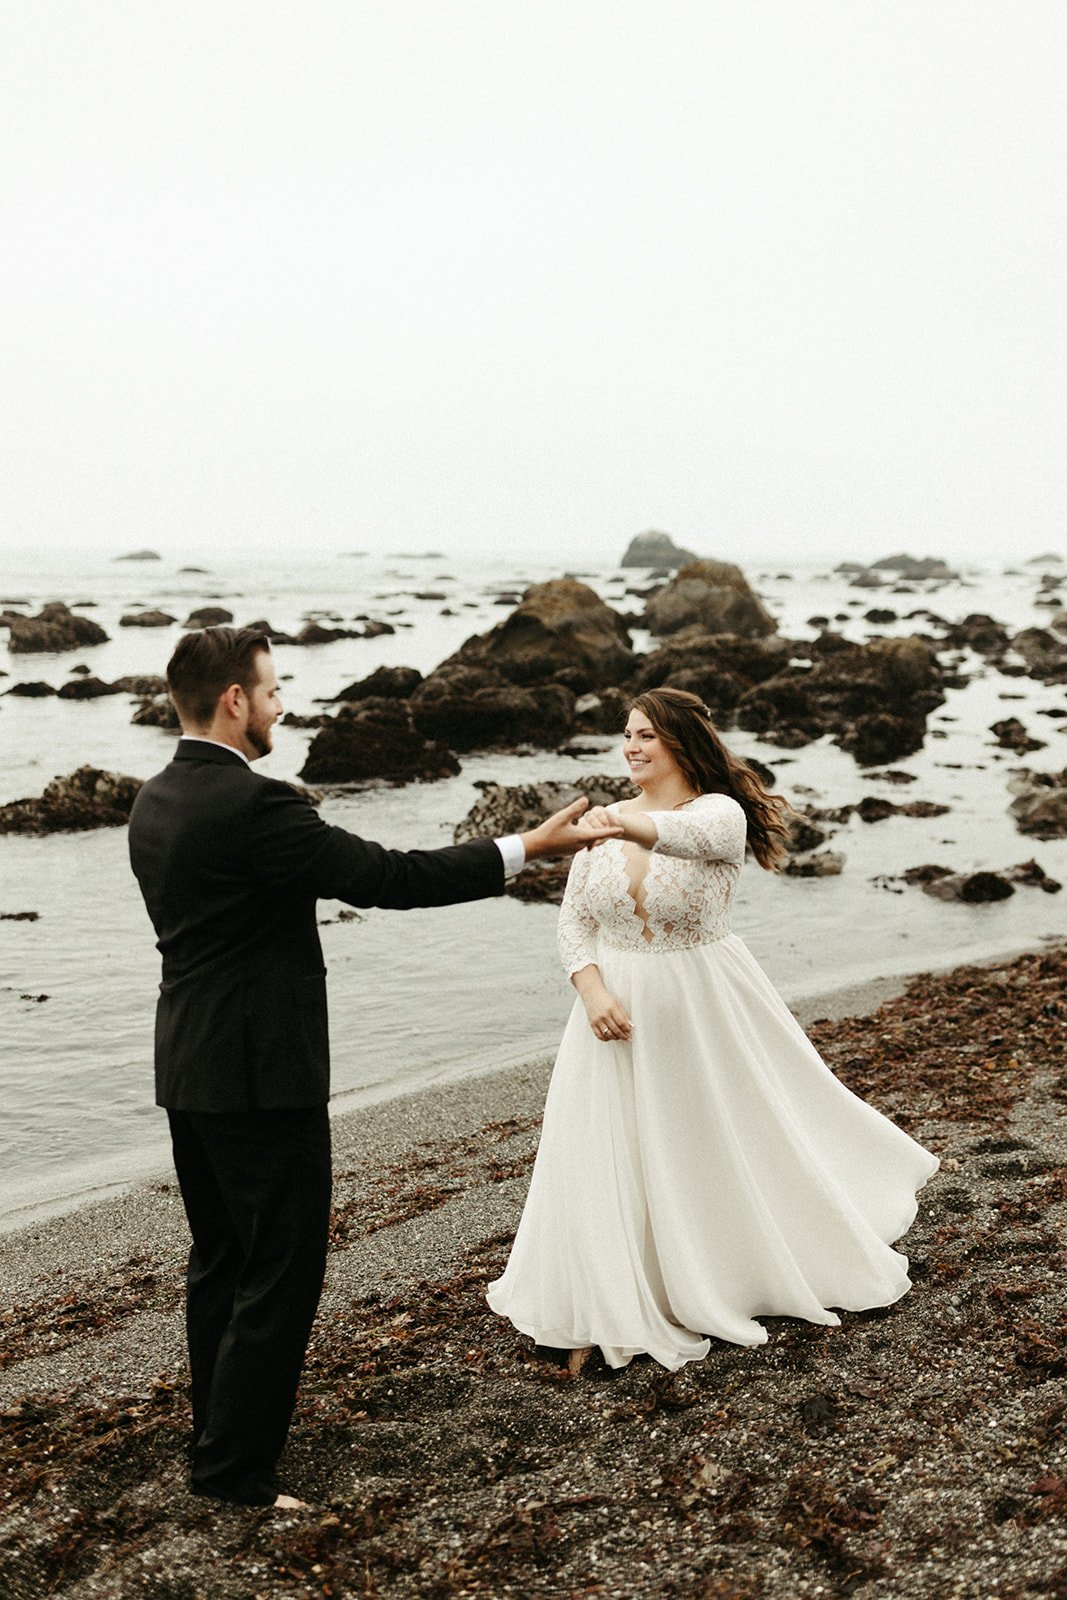 wedding-elopement-photos-han-kat-studio-pnw-portland-oregon-coast-49_websize.jpg